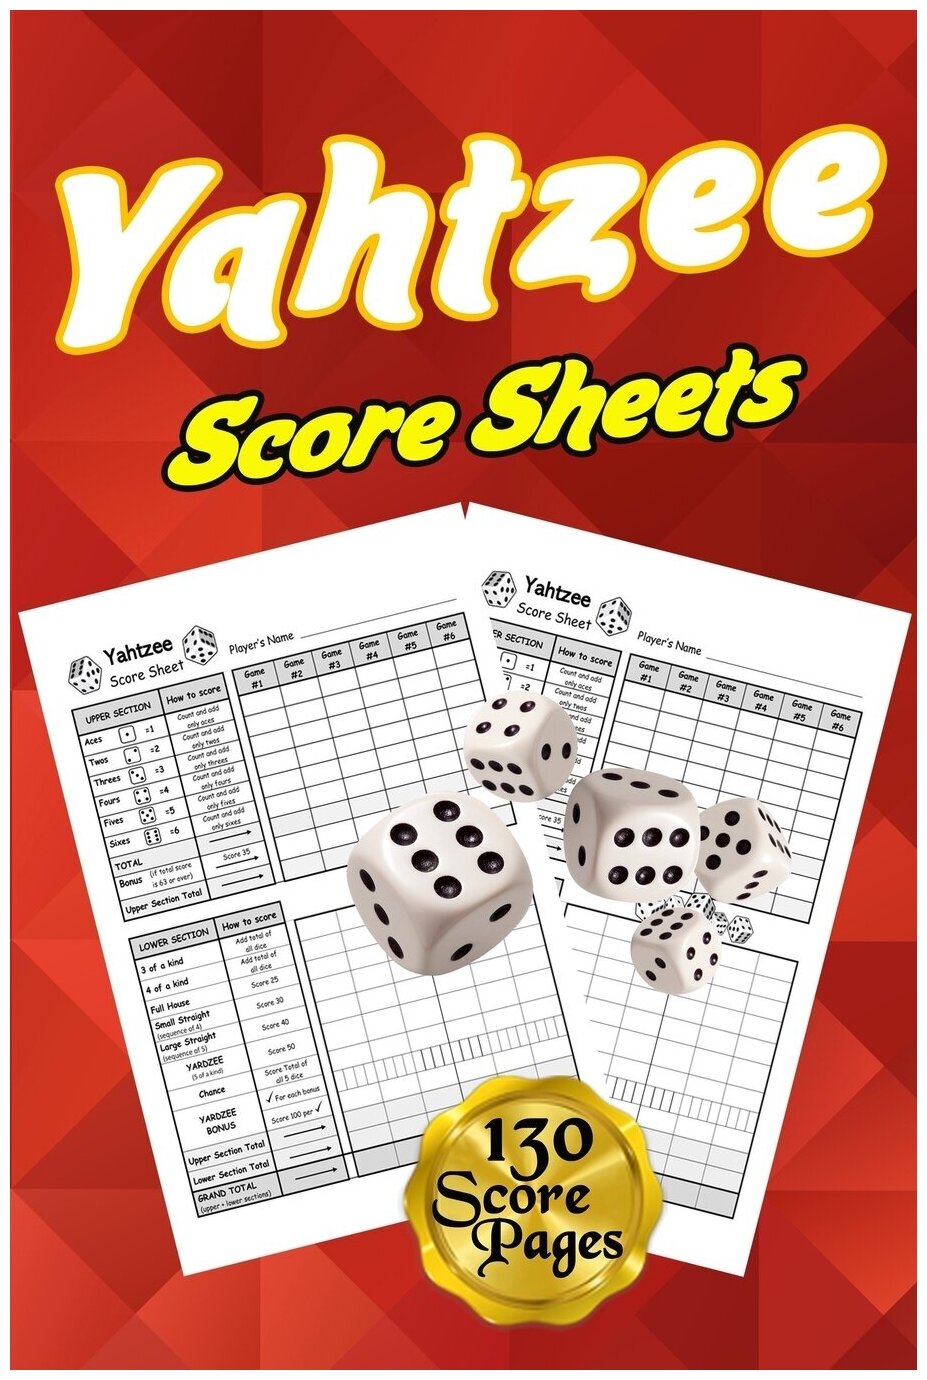 Yahtzee Score Sheets. 130 Pads for Scorekeeping - Yahtzee Score Pads | Yahtzee Score Cards with Size 6 x 9 inches (The Yahtzee Score Books)